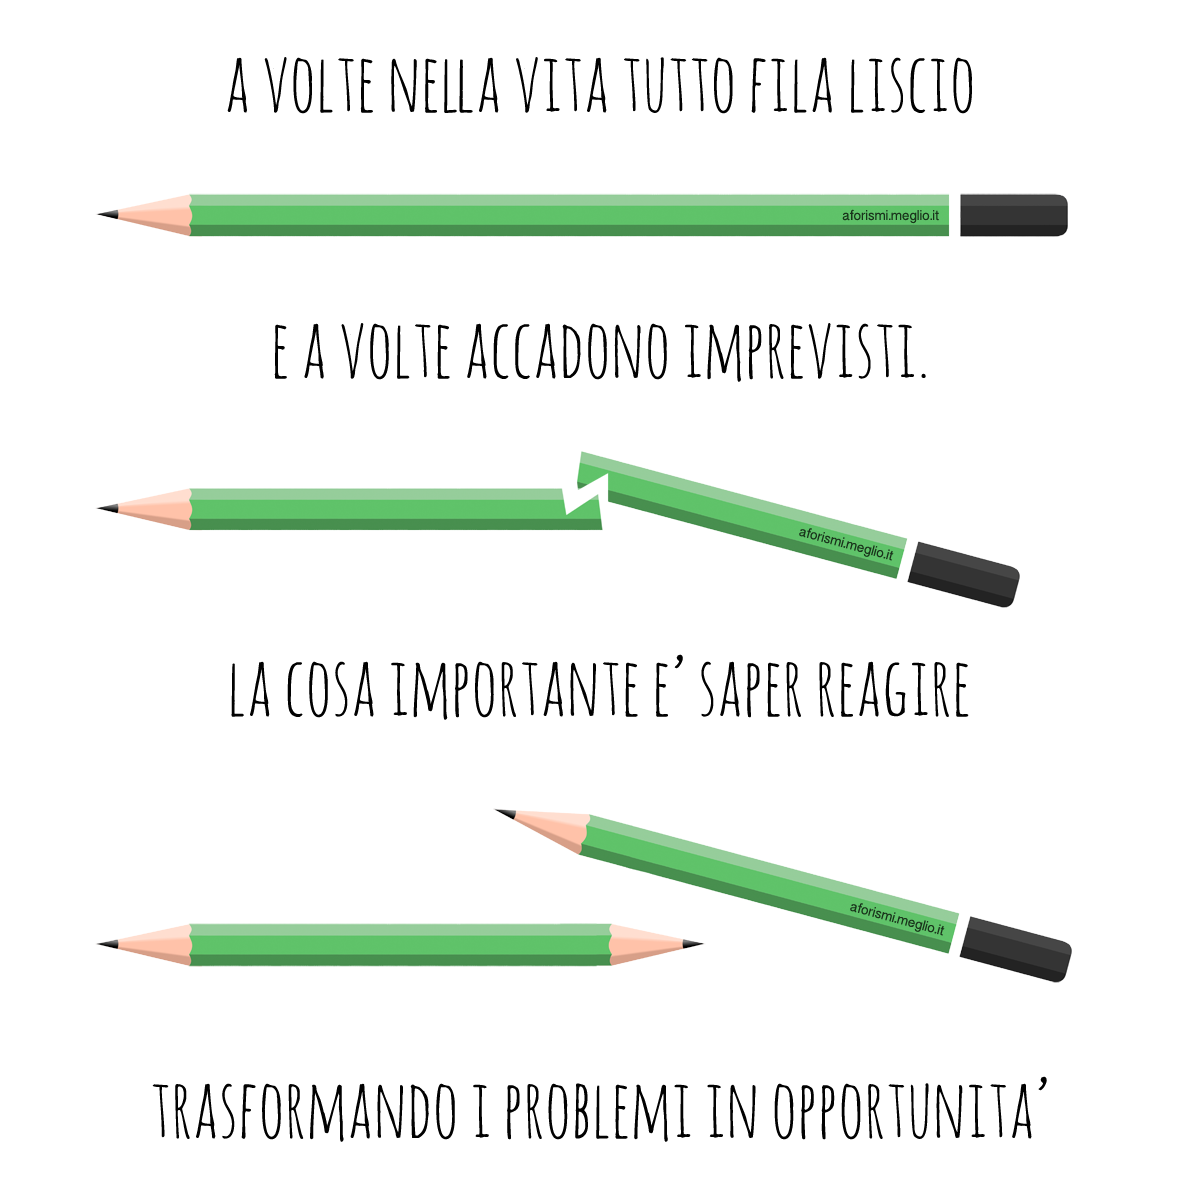 vita problemi opportunità e soluzioni - da una matita a due matite